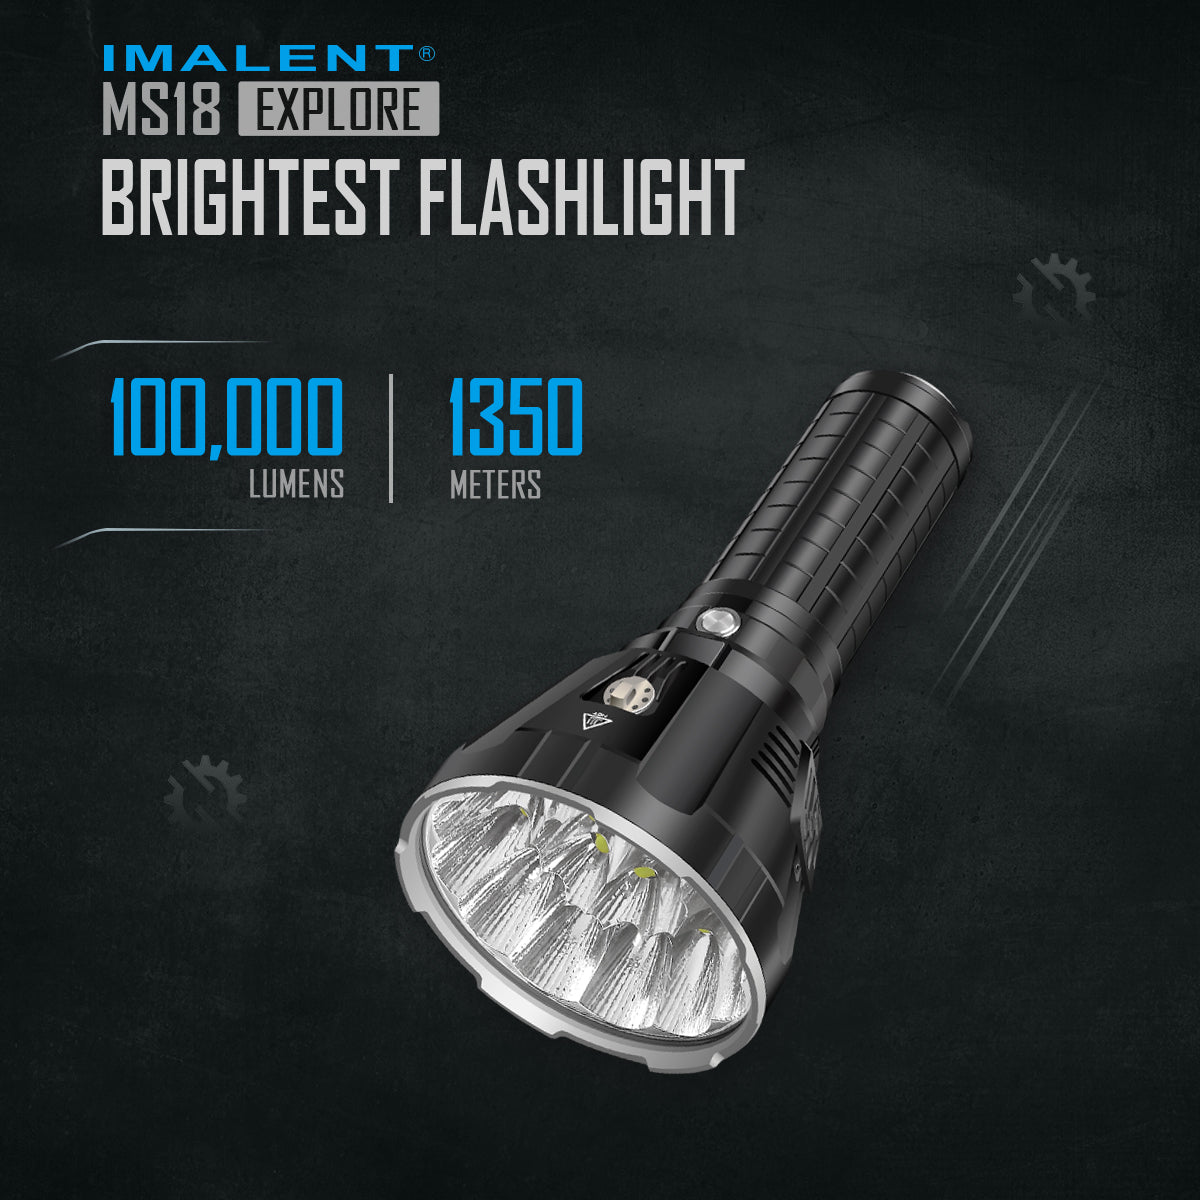 Rechargeable 10000 Lumen Super Bright LDE Flashlight Tactical